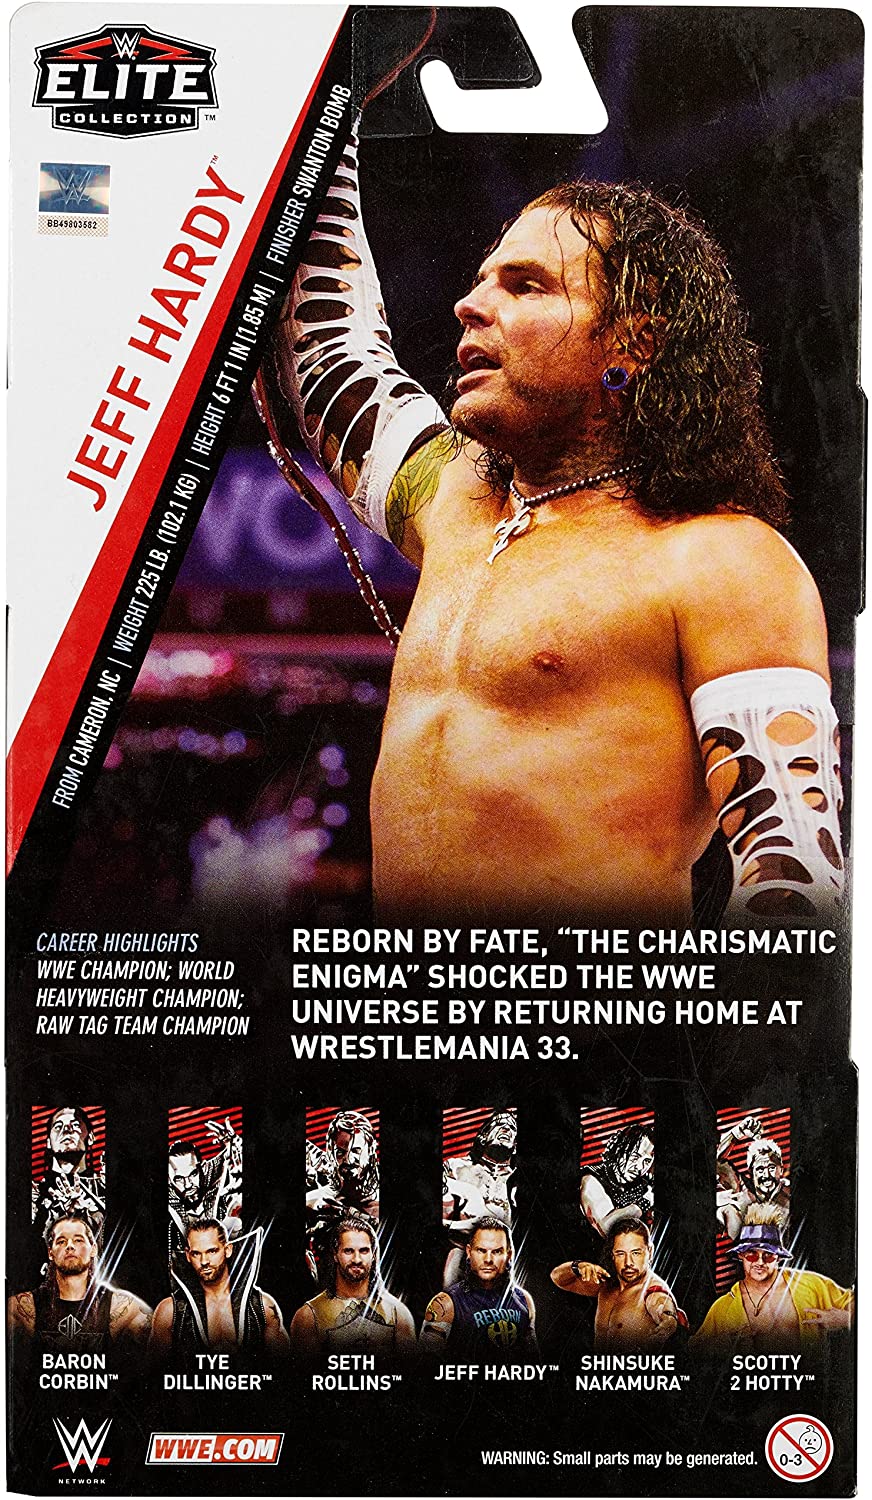 WWE Mattel Elite Collection Series 57 Jeff Hardy